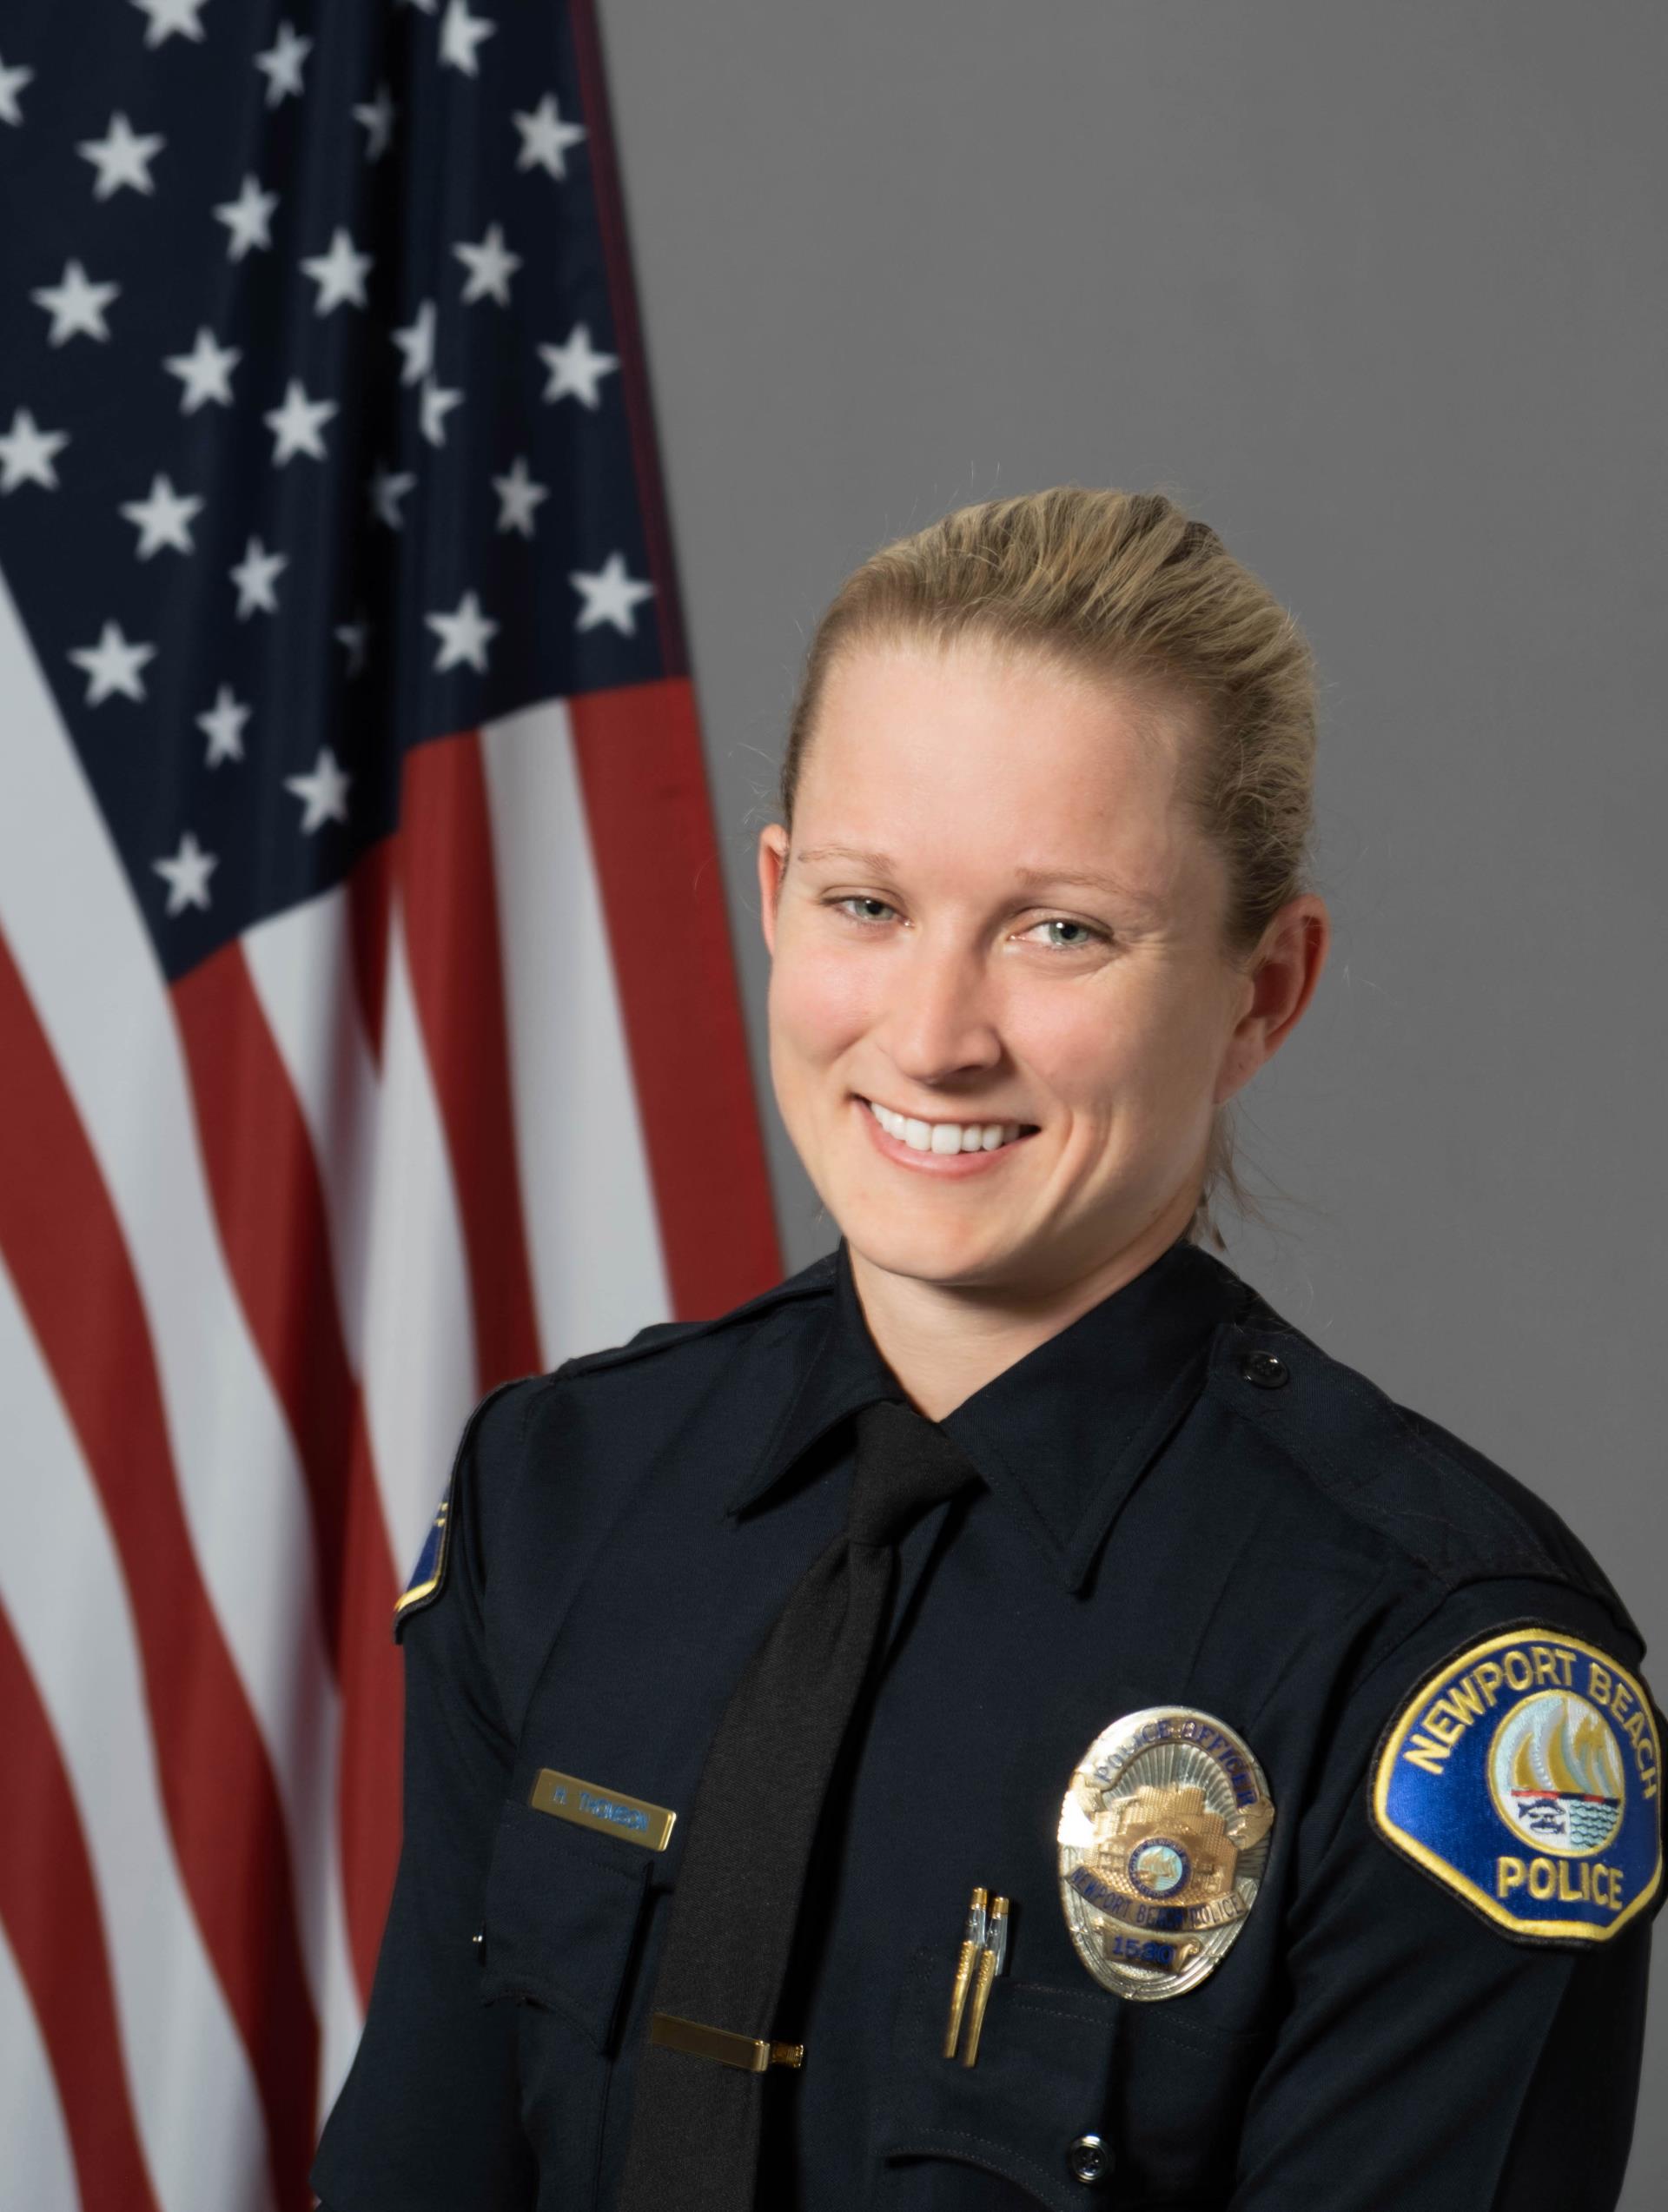 Officer Heather Thomson